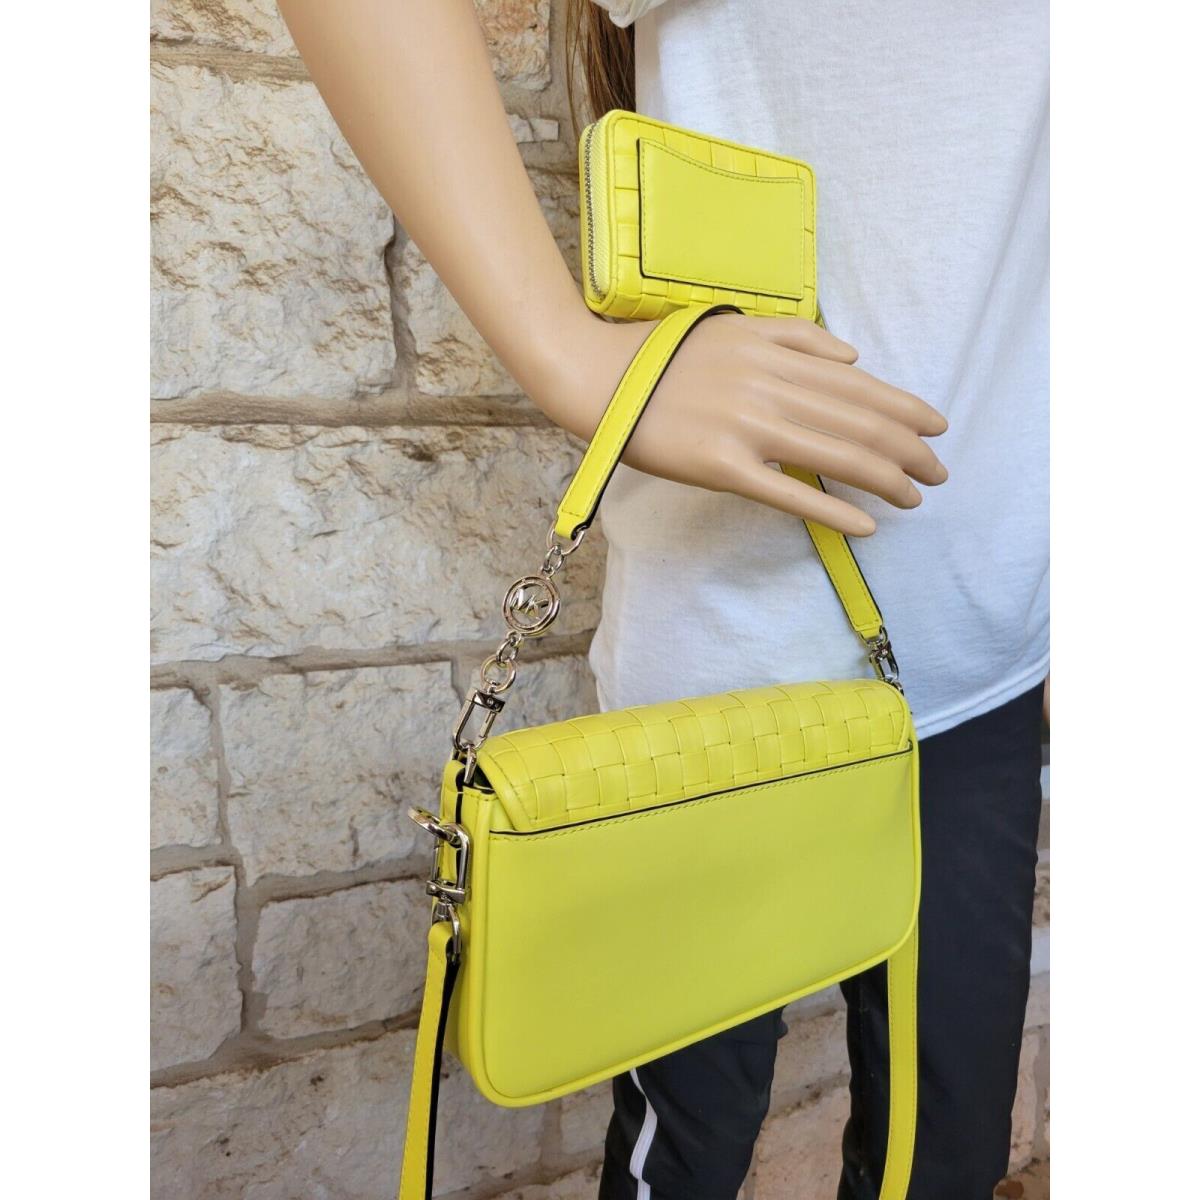 Michael Kors brown leather gold hardware shoulder bag purse w/ strap and  charm | eBay